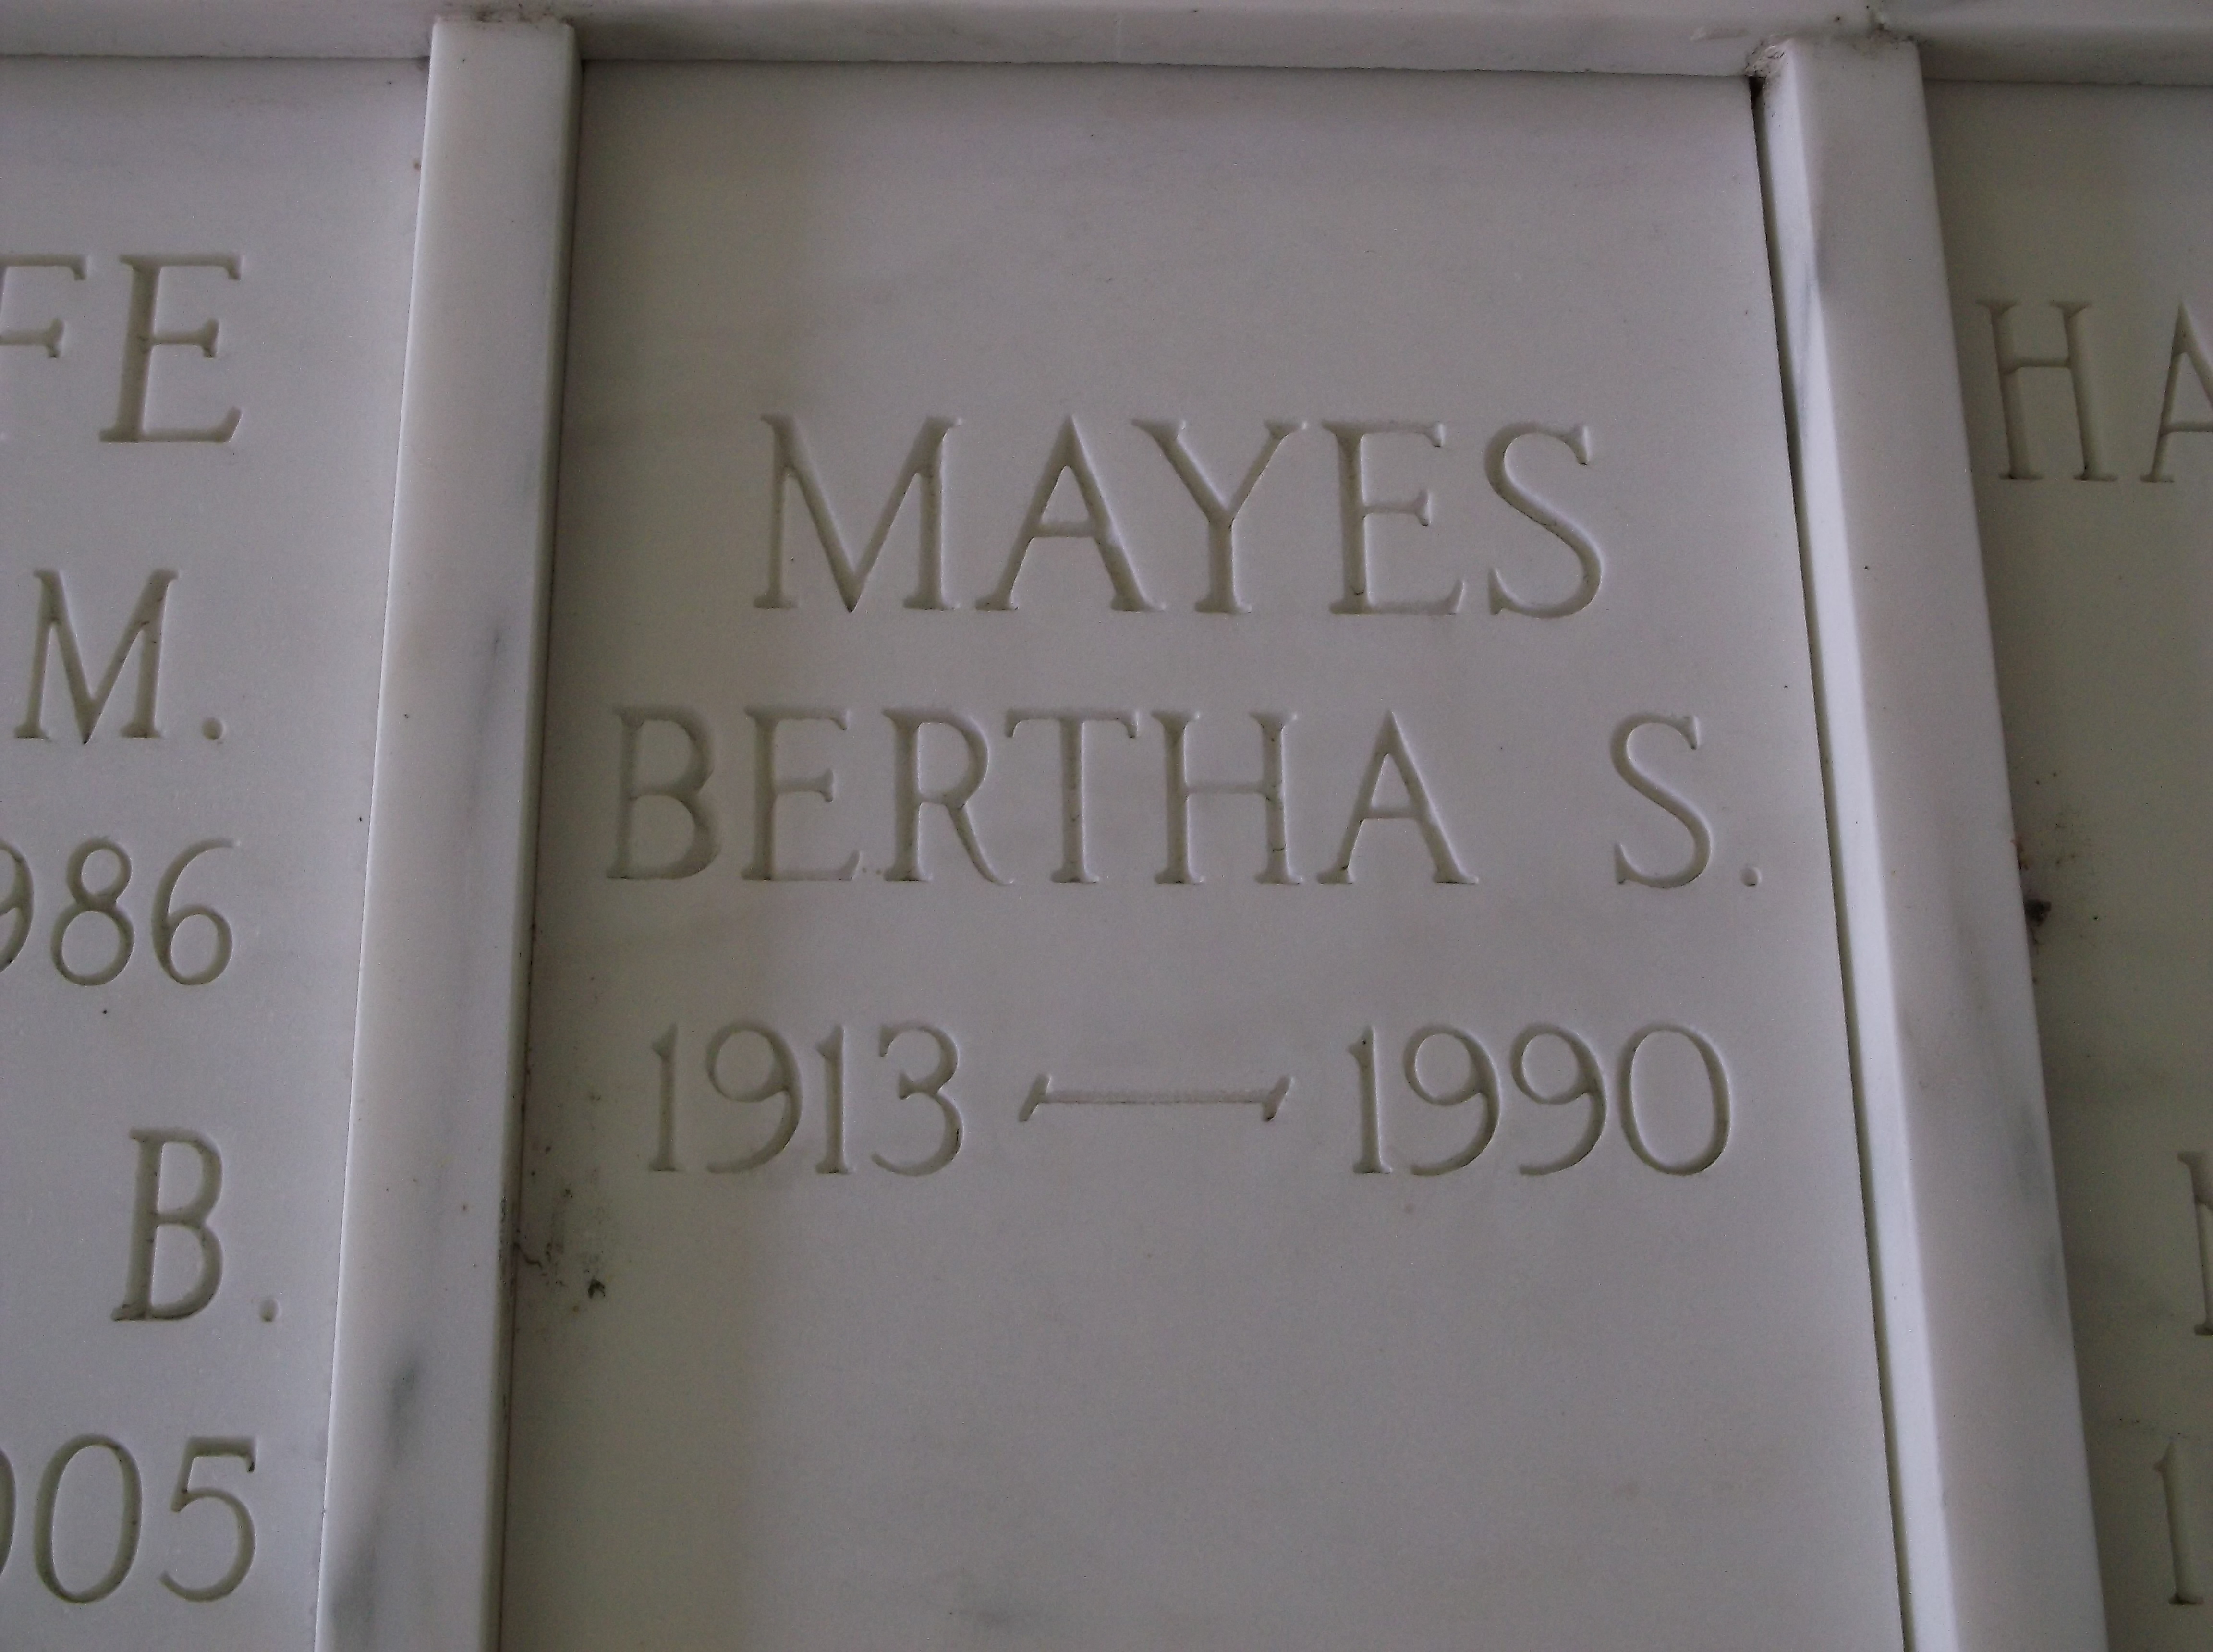 Bertha S Mayes